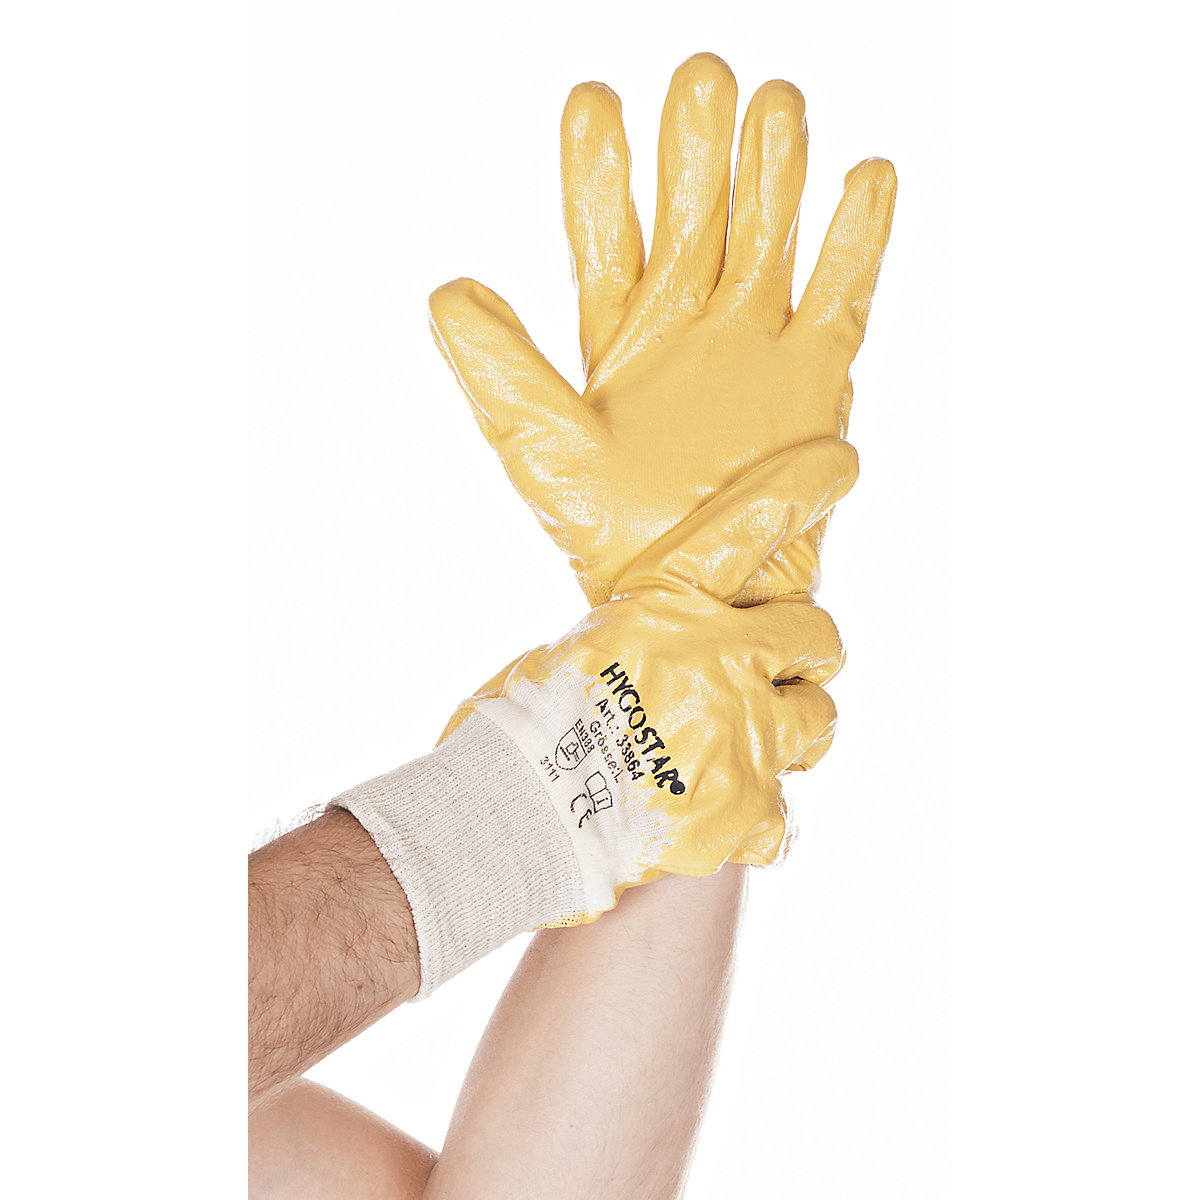 NITRIL GRIP nitrile work gloves